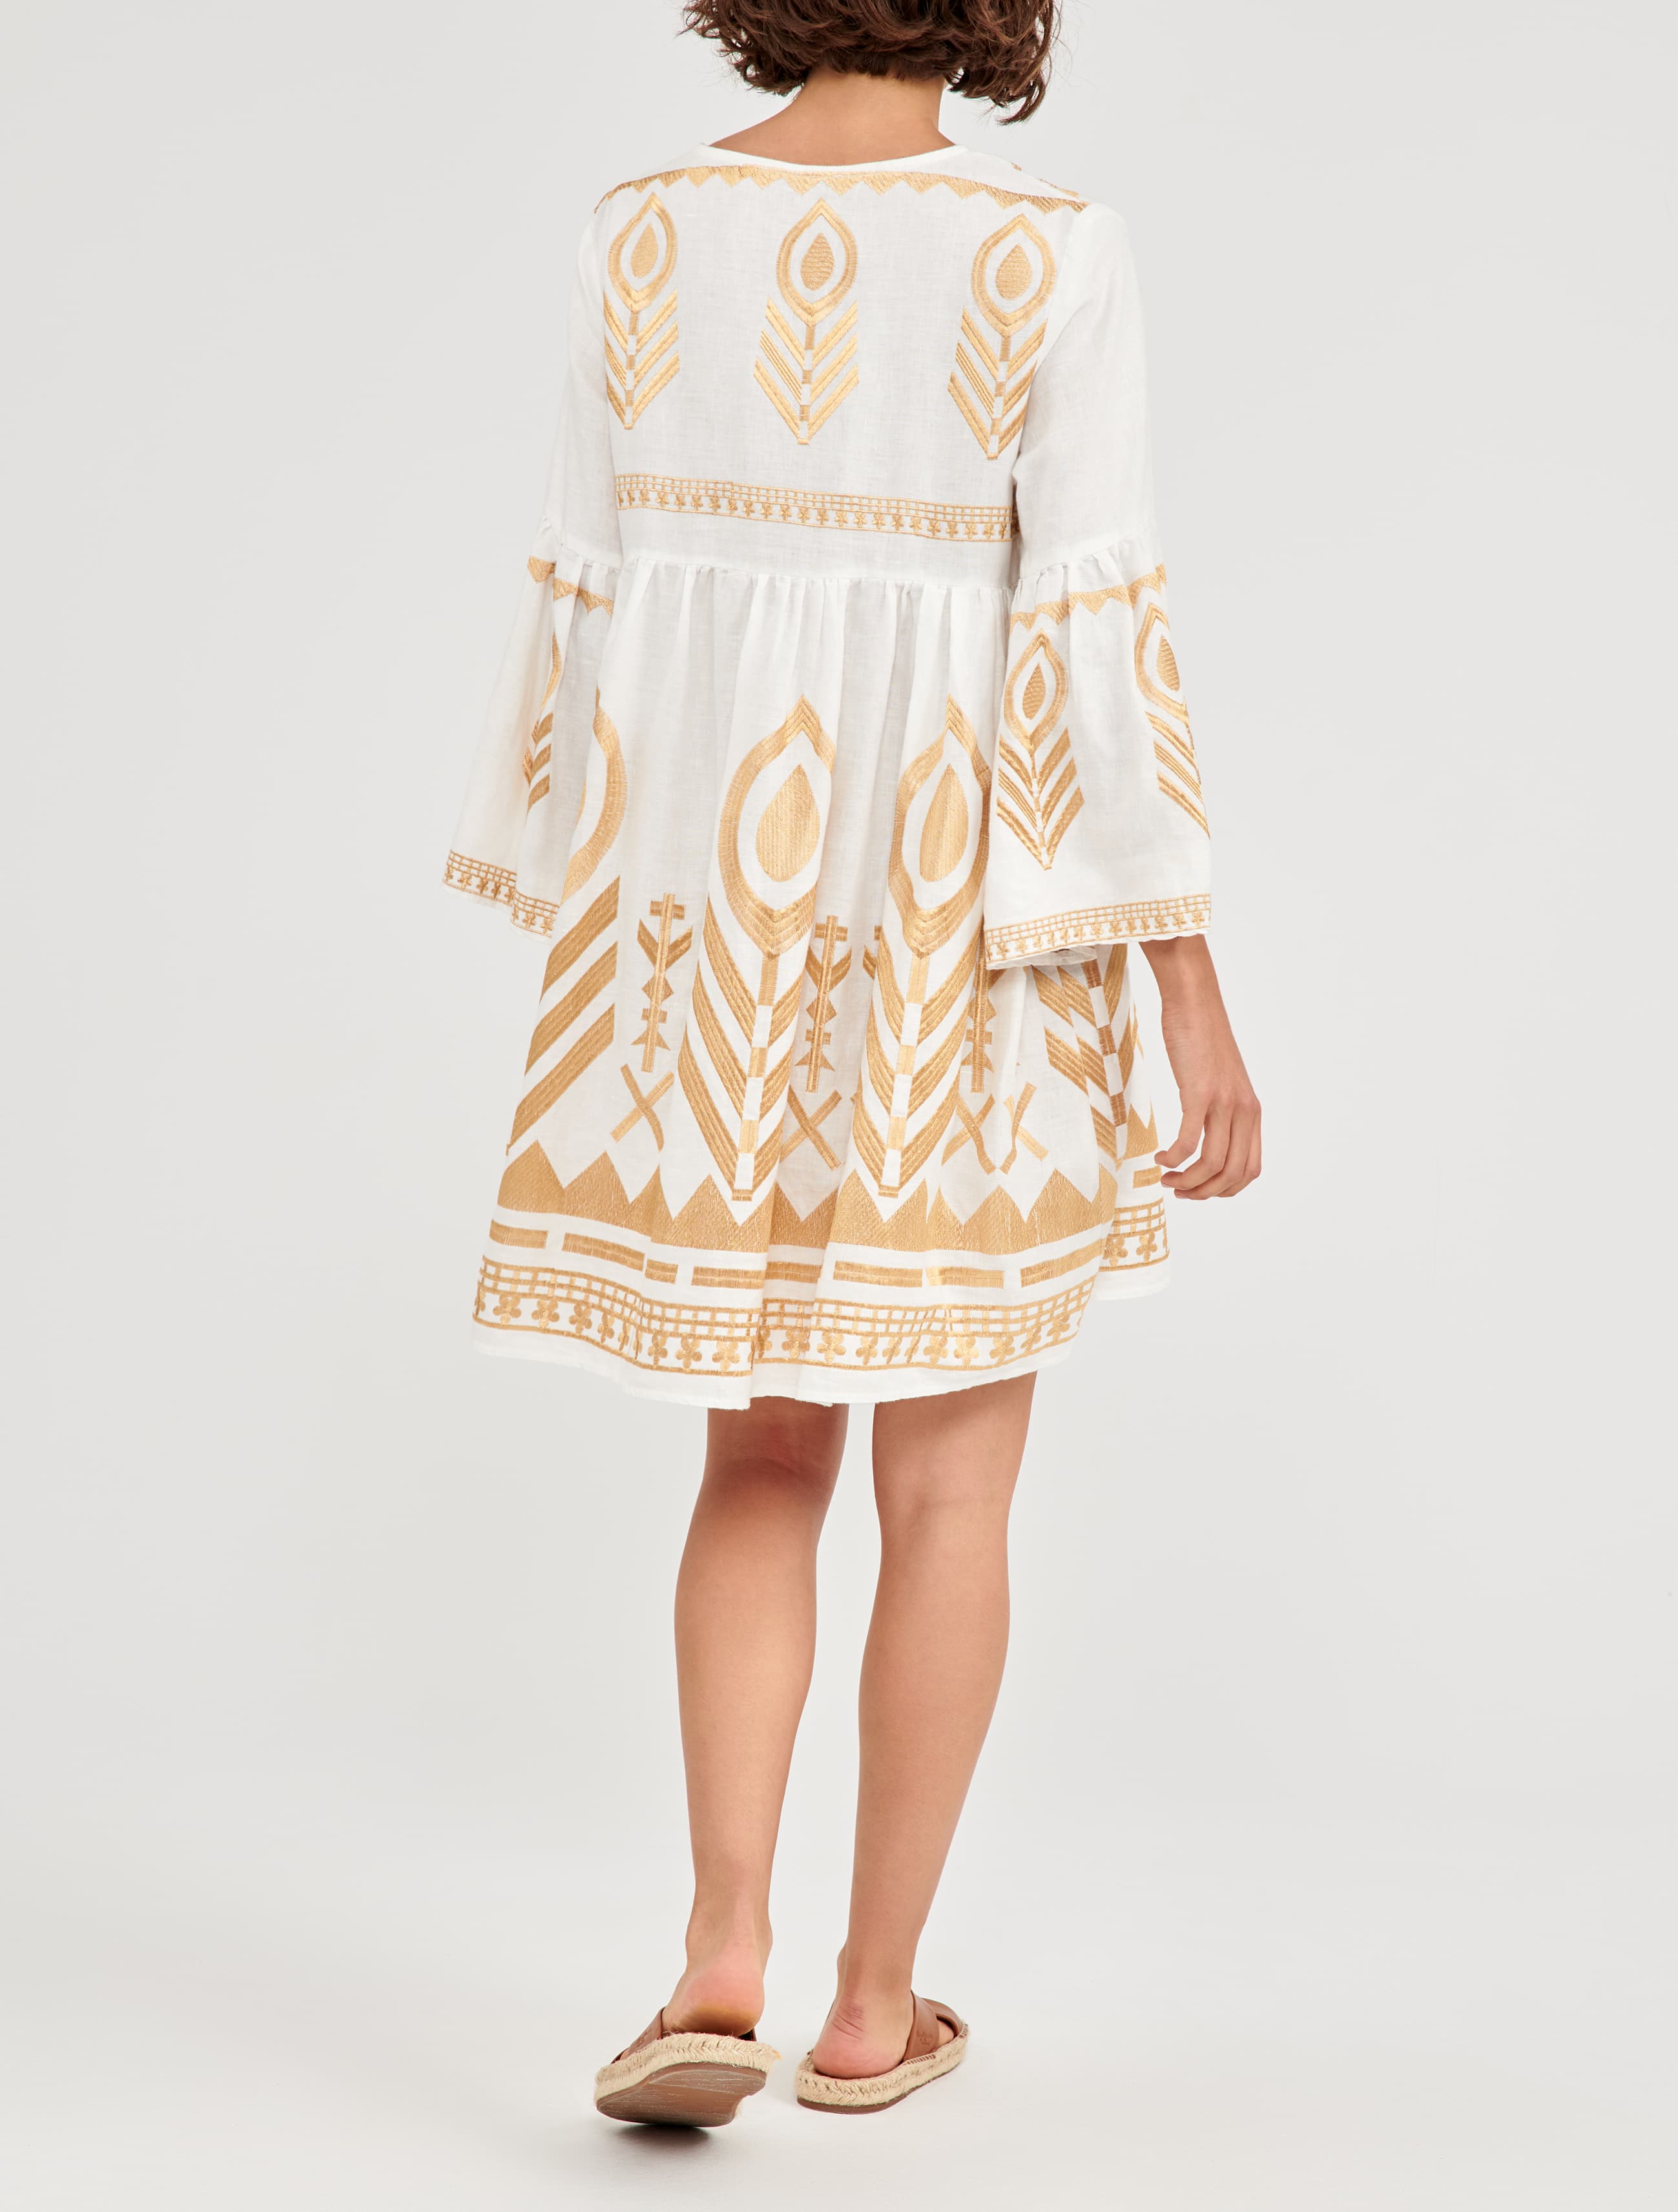 Greek Archaic Kori Short White Dress with gold